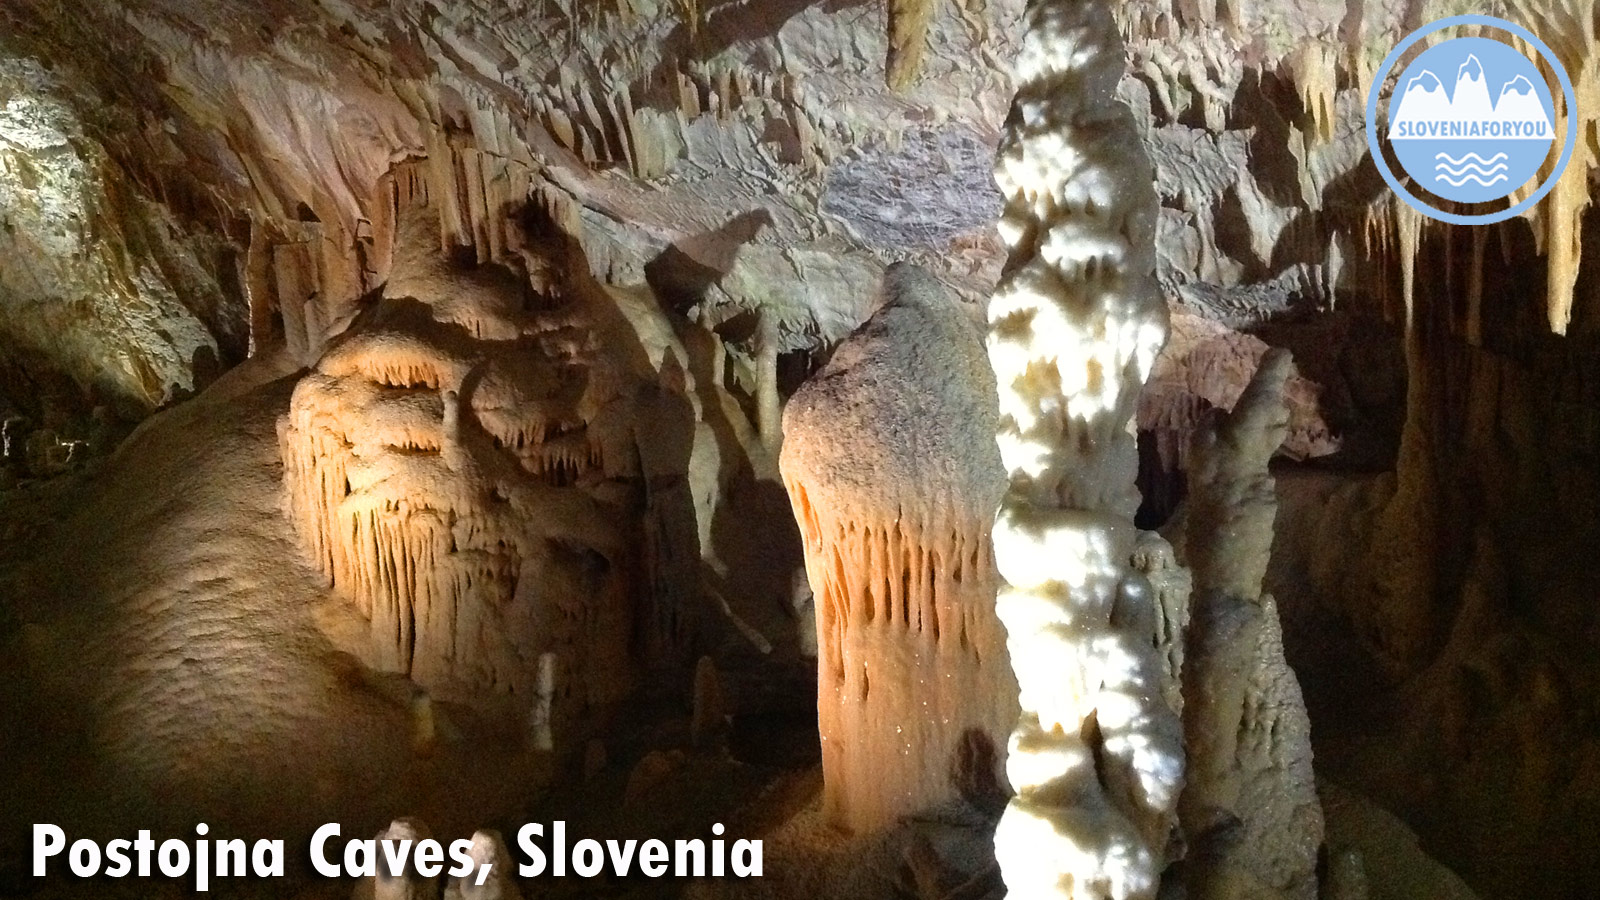 Visit the stunning Postojna Caves_Sloveniaforyou